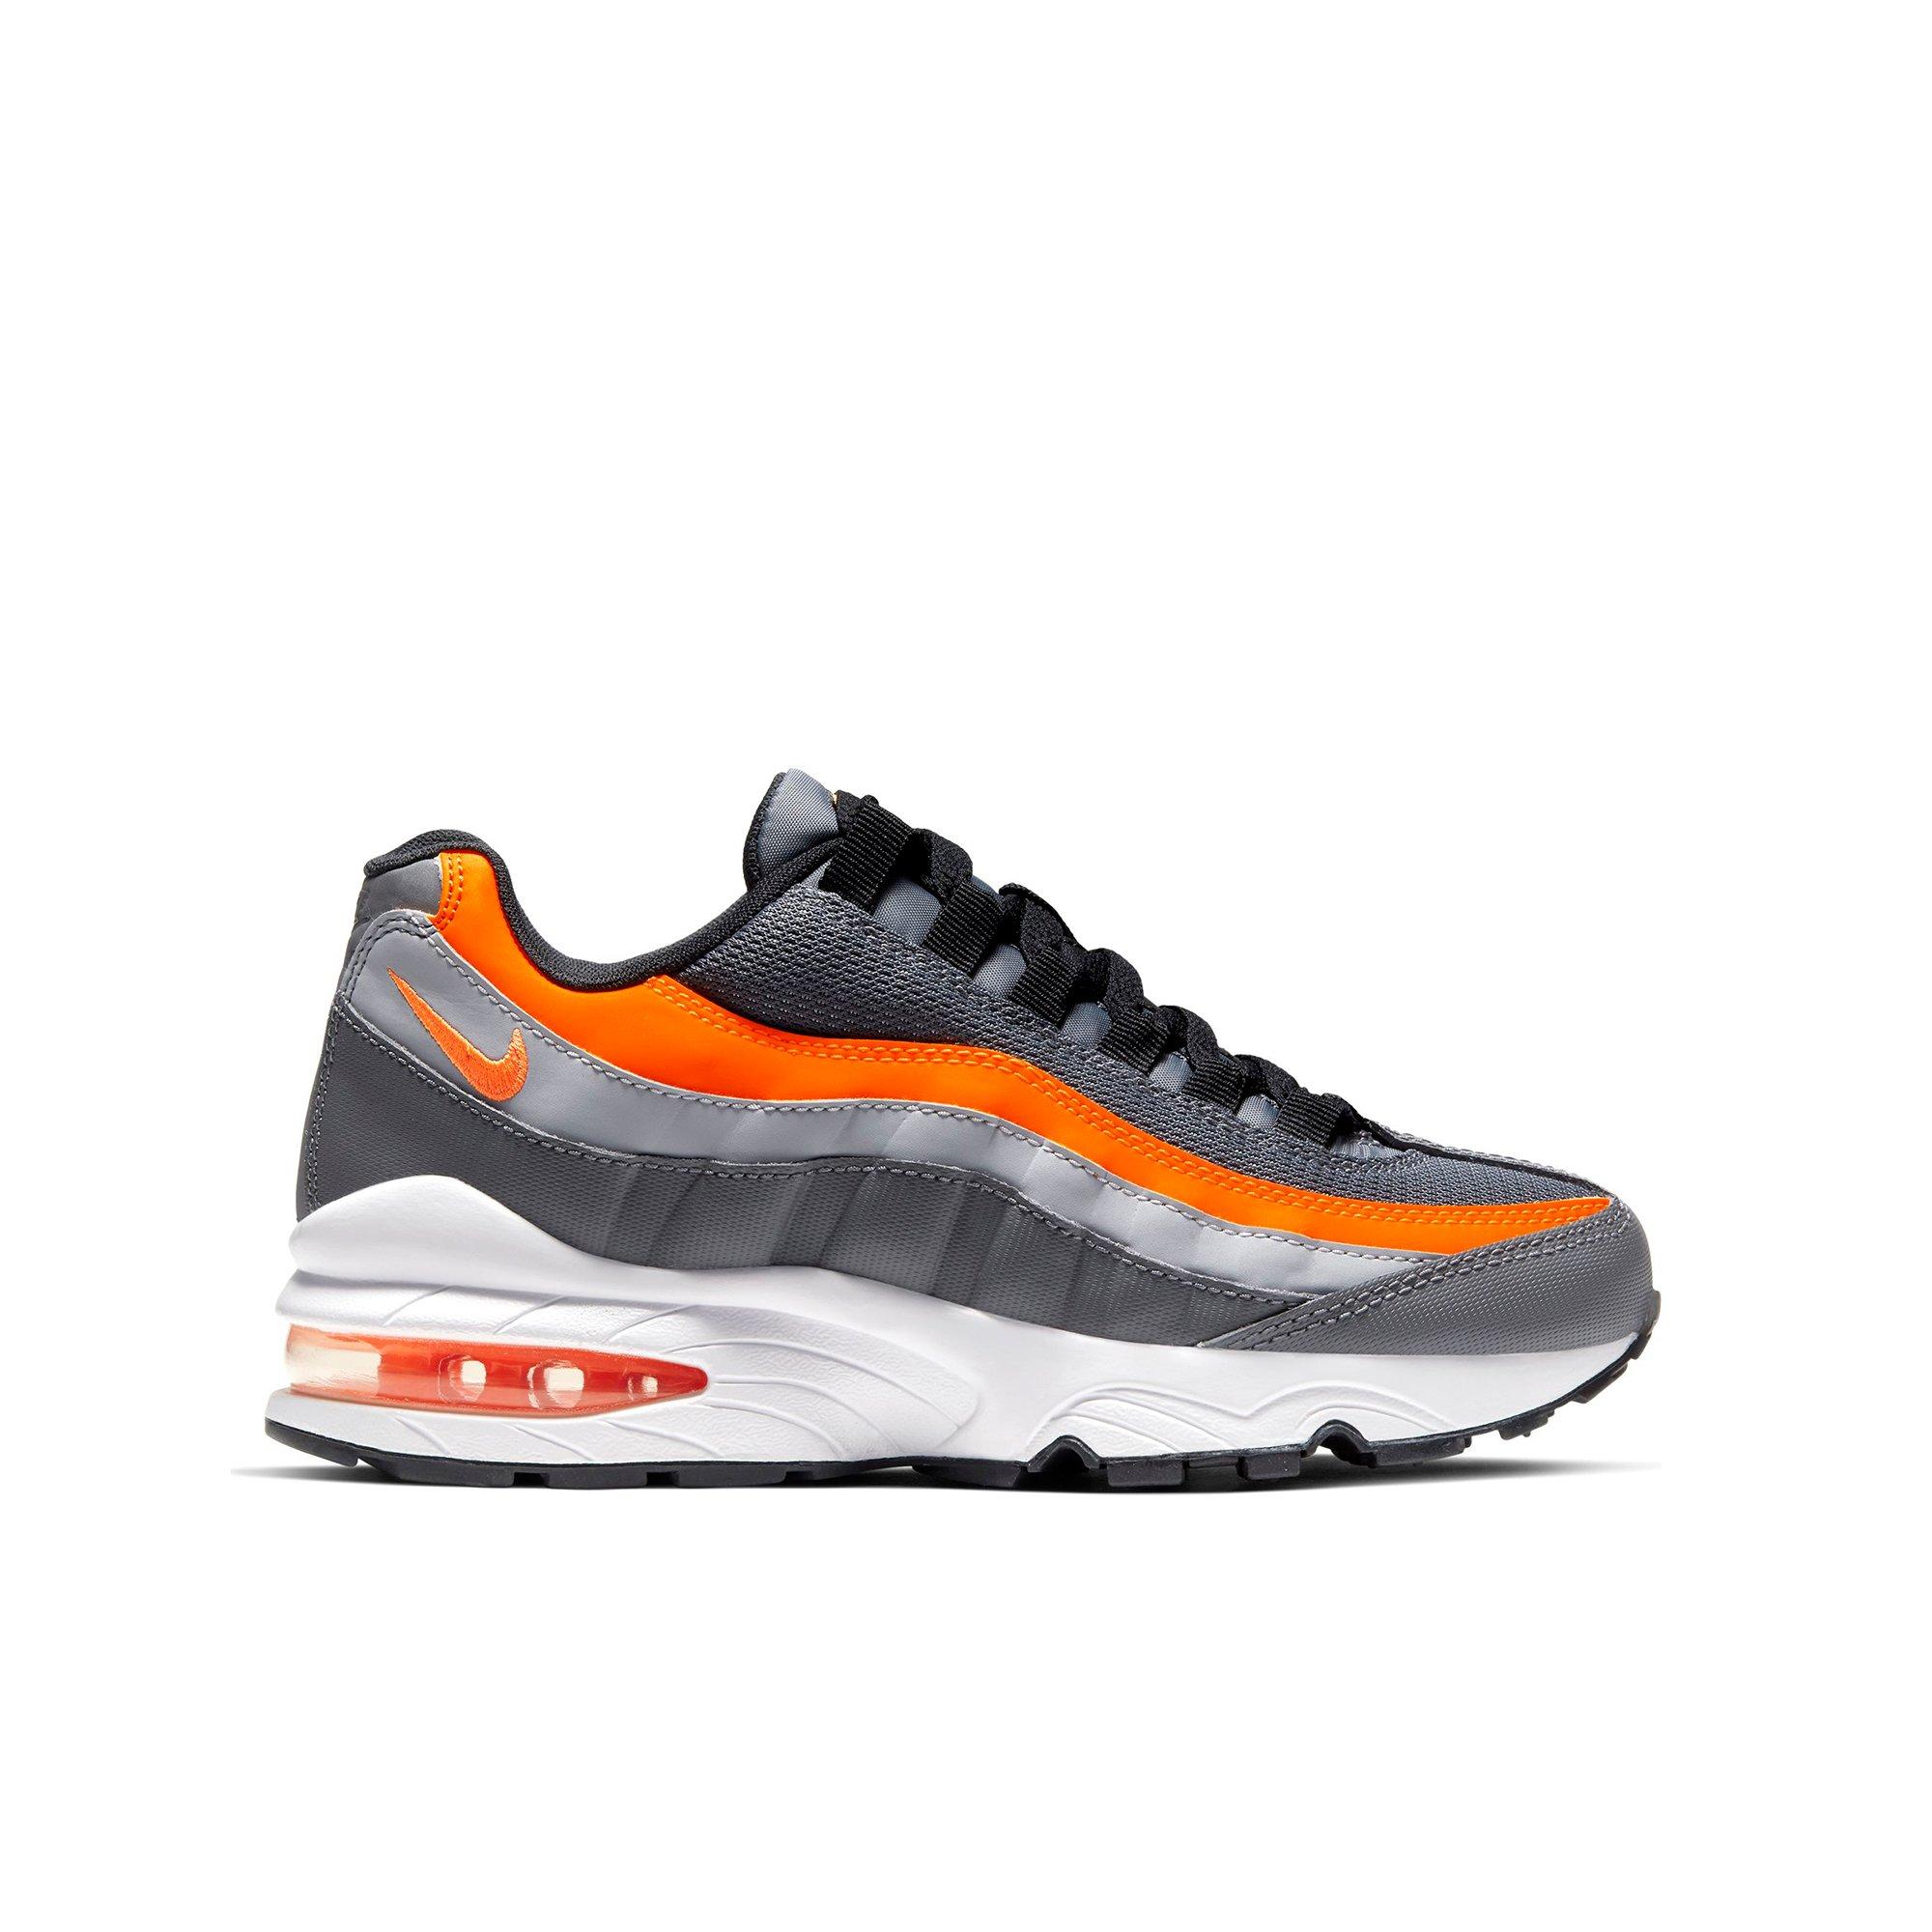 orange and gray air max 95